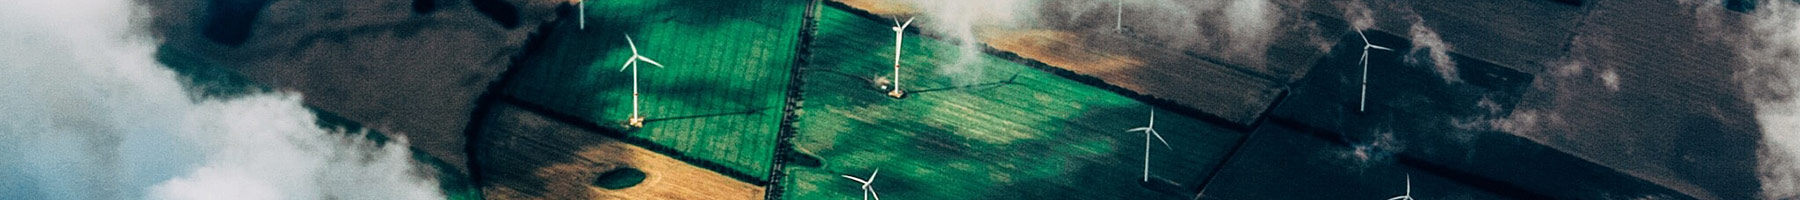 aerial view of windmills in farmland